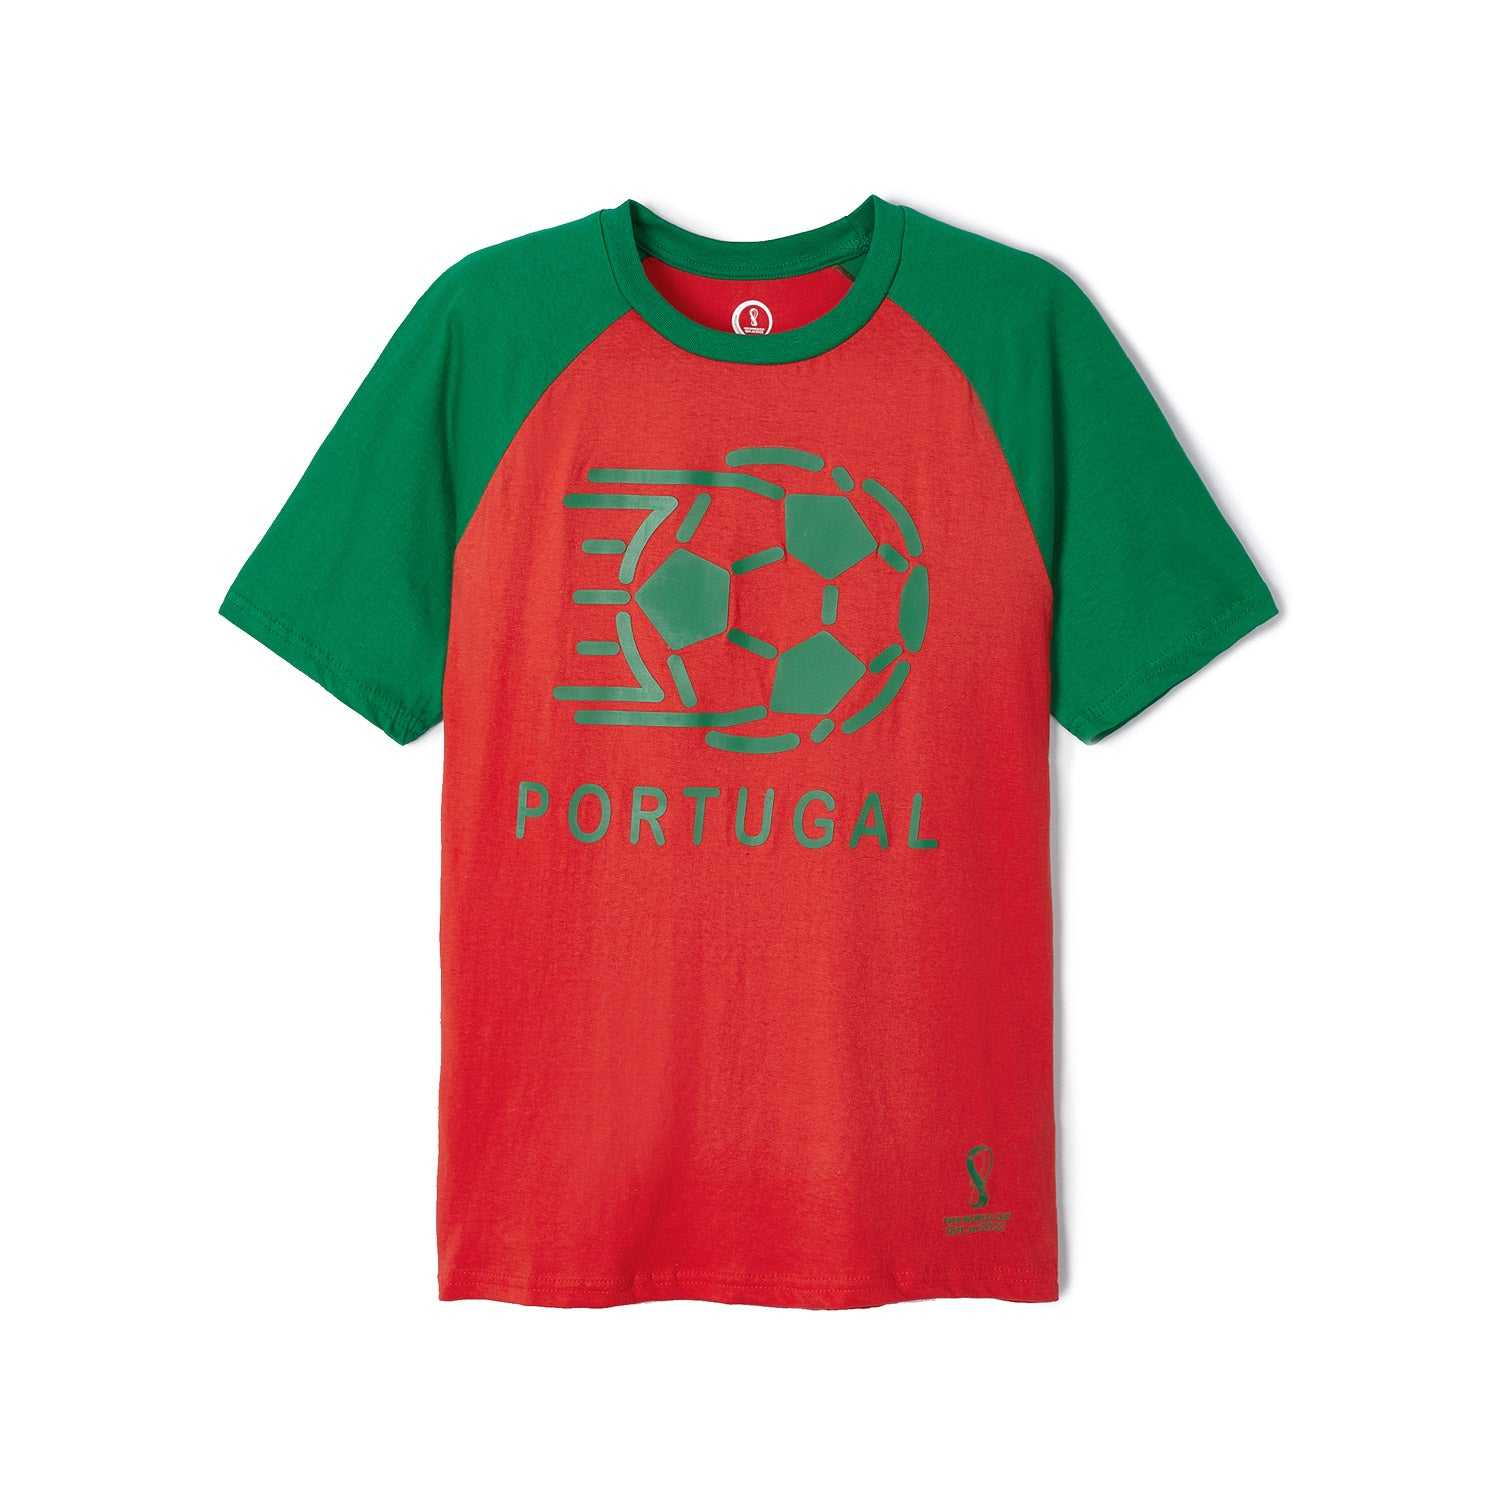 2022 World Cup Portugal Red Raglan T-Shirt - Men's